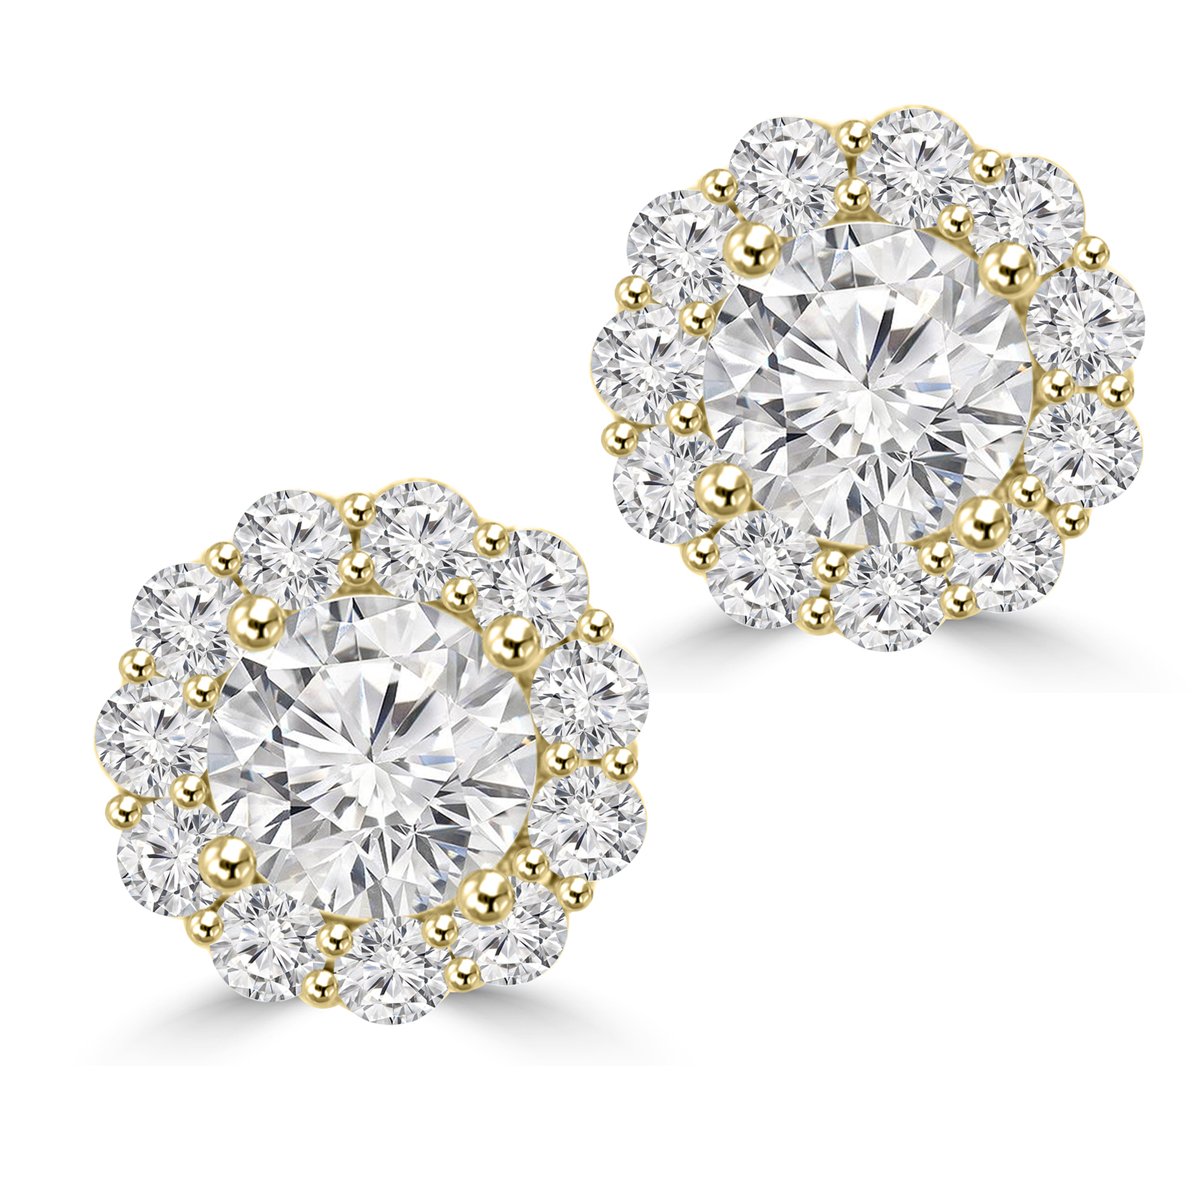 Madina Jewelry 2.05 Ct Ladies Round Cut Diamond Stud Earring In 14 kt White Gold